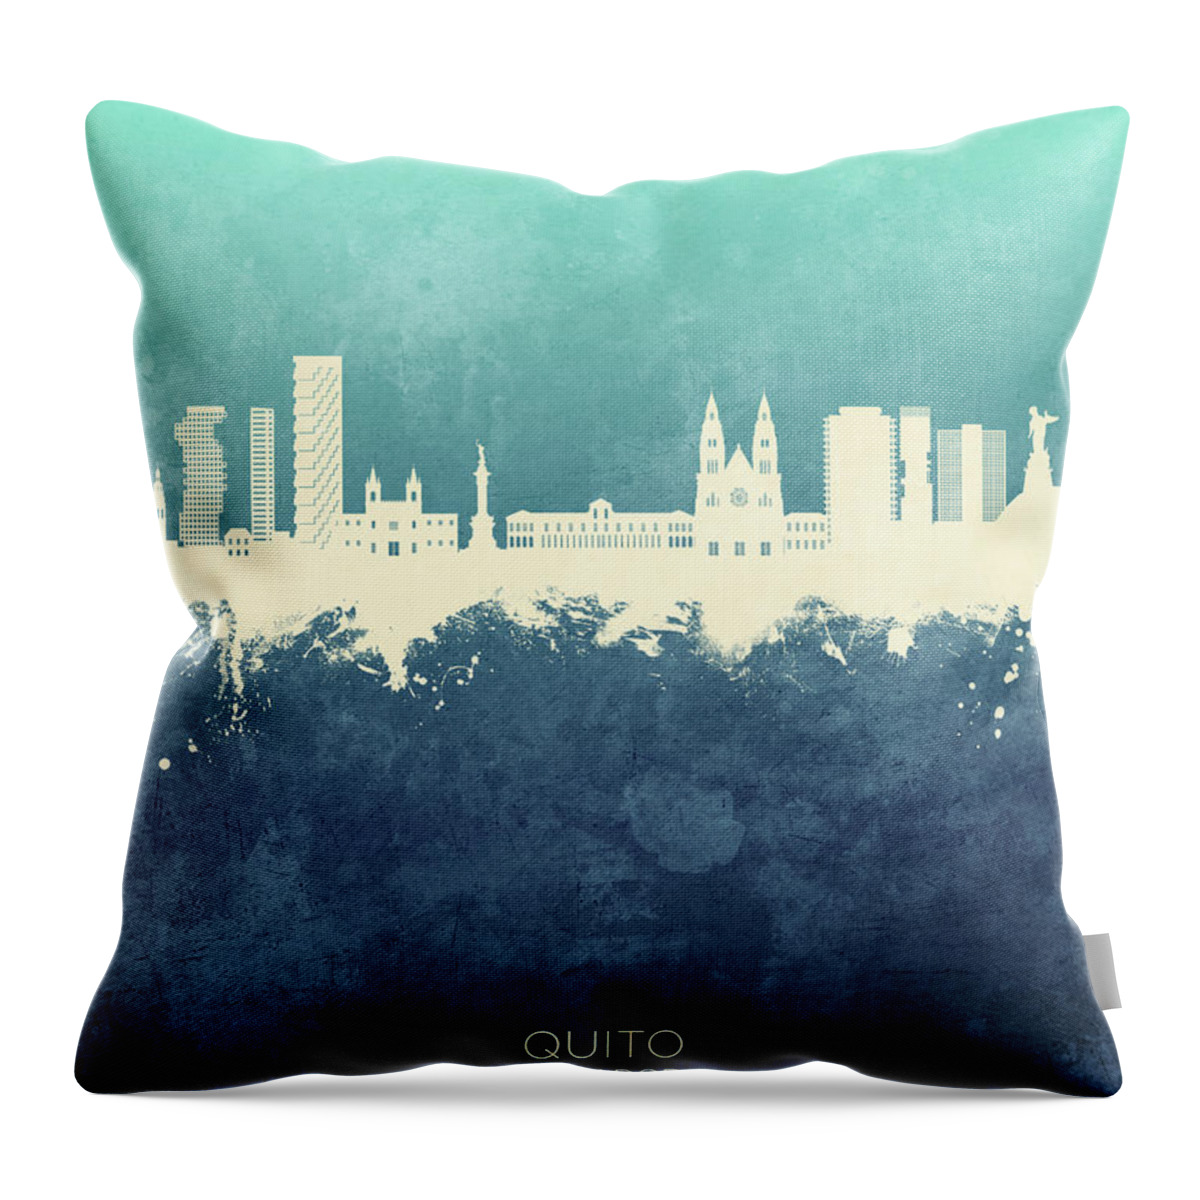 Quito Throw Pillow featuring the digital art Quito Ecuador Skyline #55 by Michael Tompsett